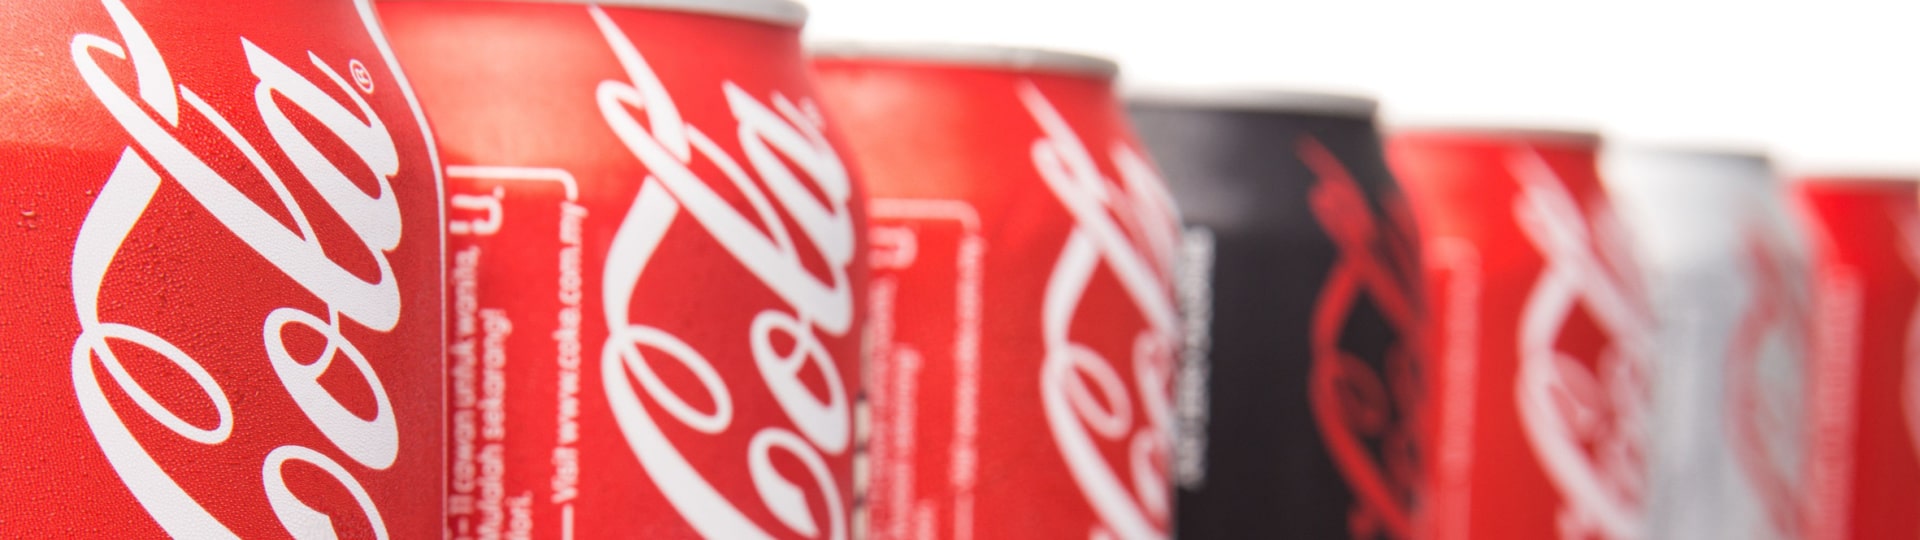 Tržby Coca-Coly překonaly odhady